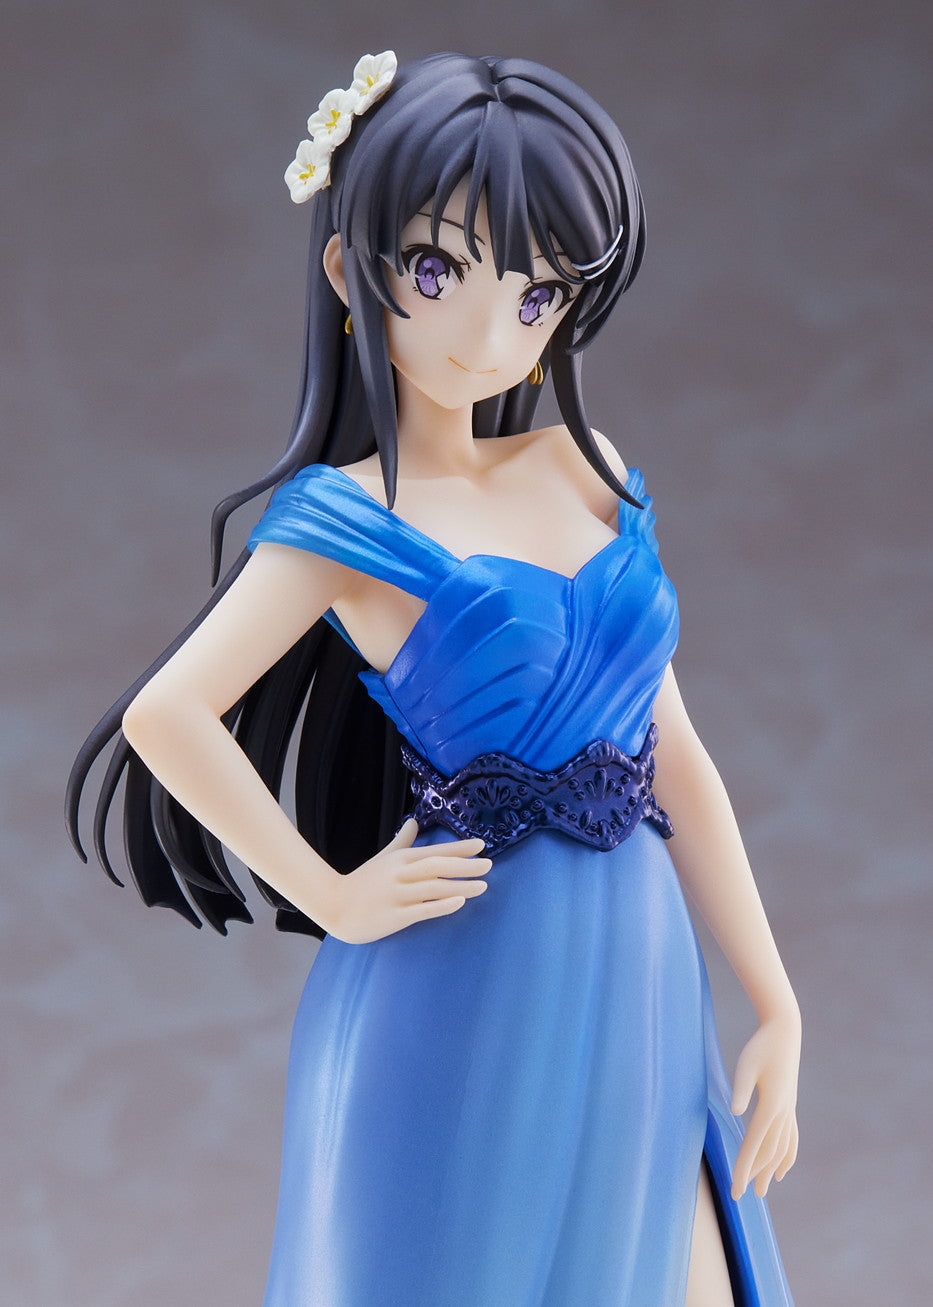 Rascal Does Not Dream of Bunny Girl Senpai - Mai Sakurajima Figure (Blue Wedding Dress Ver.) image count 5